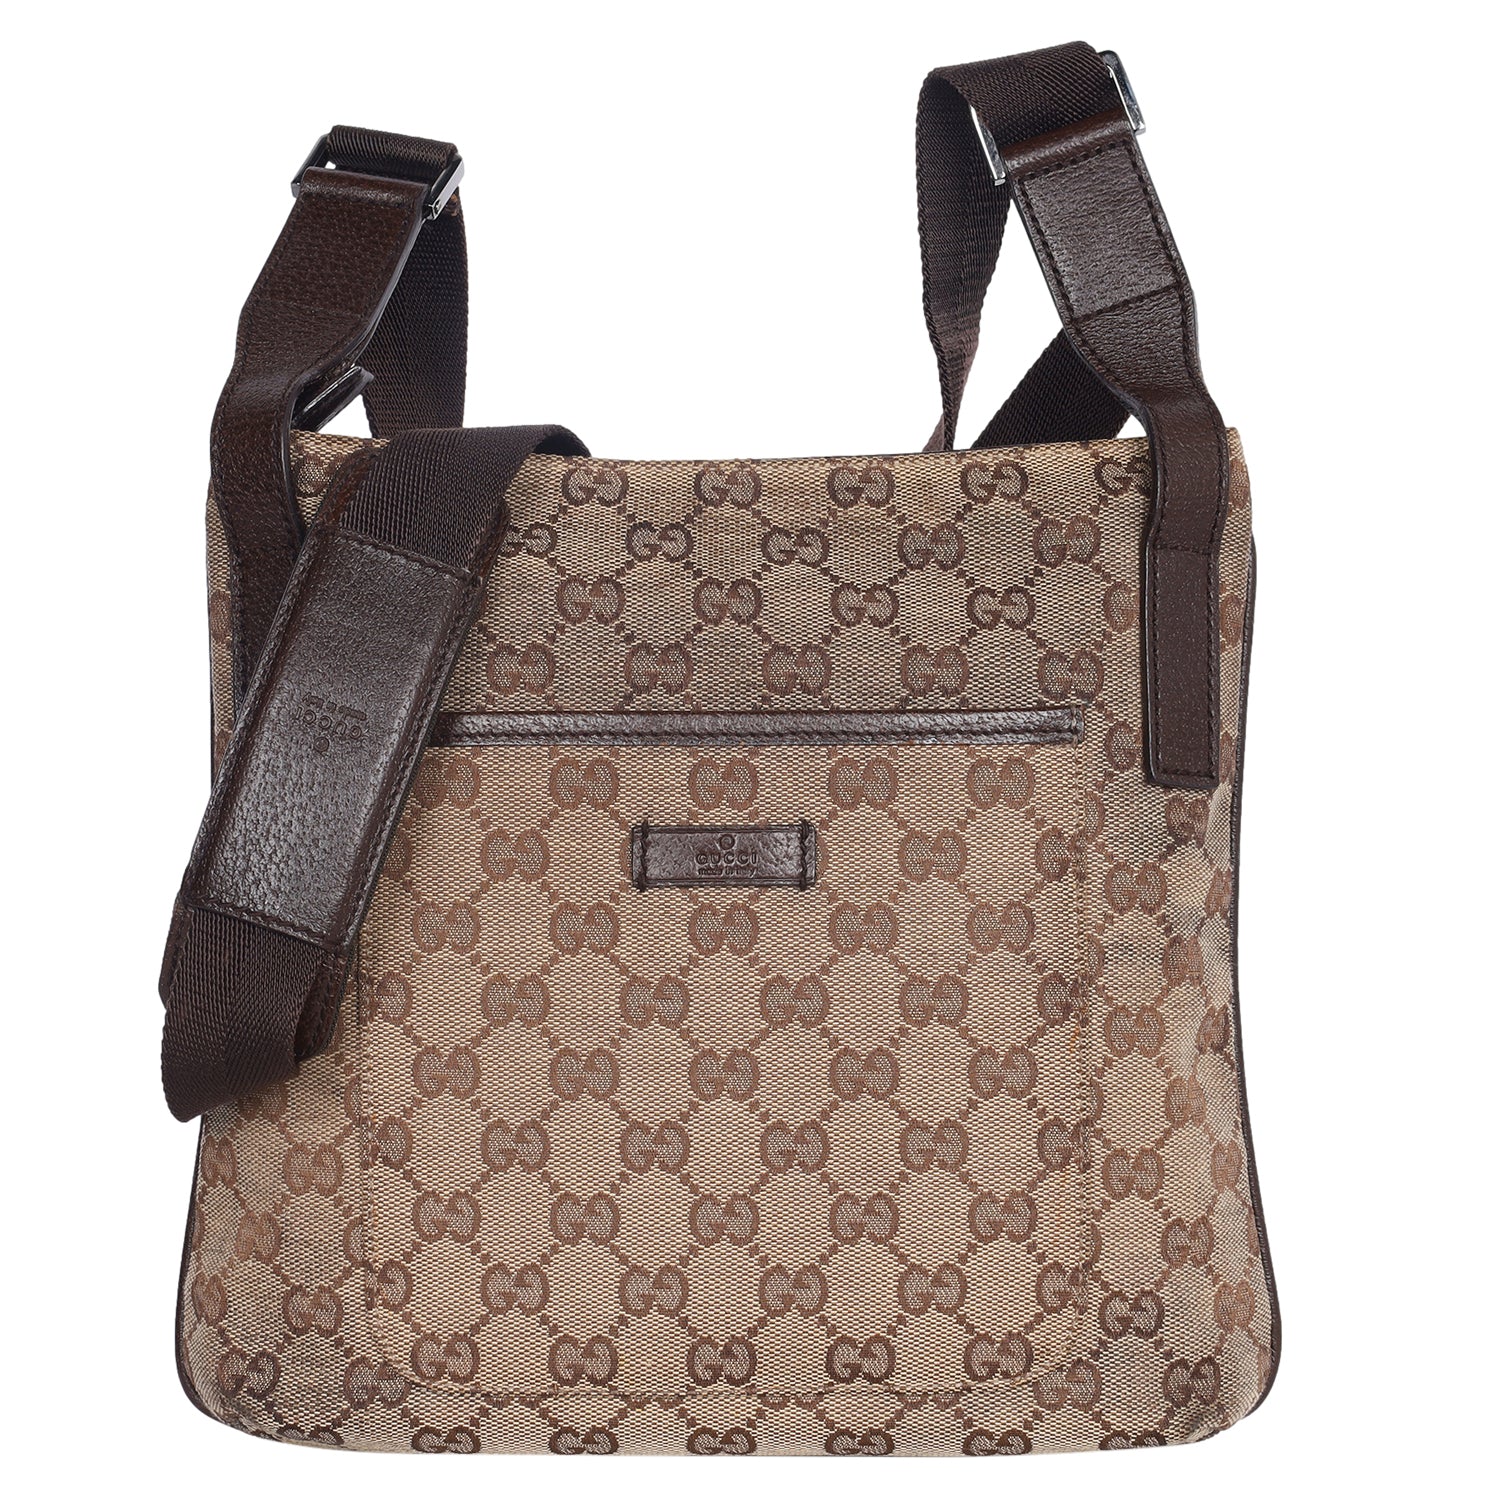 Gucci Brown GG Supreme Canvas Messenger Bag